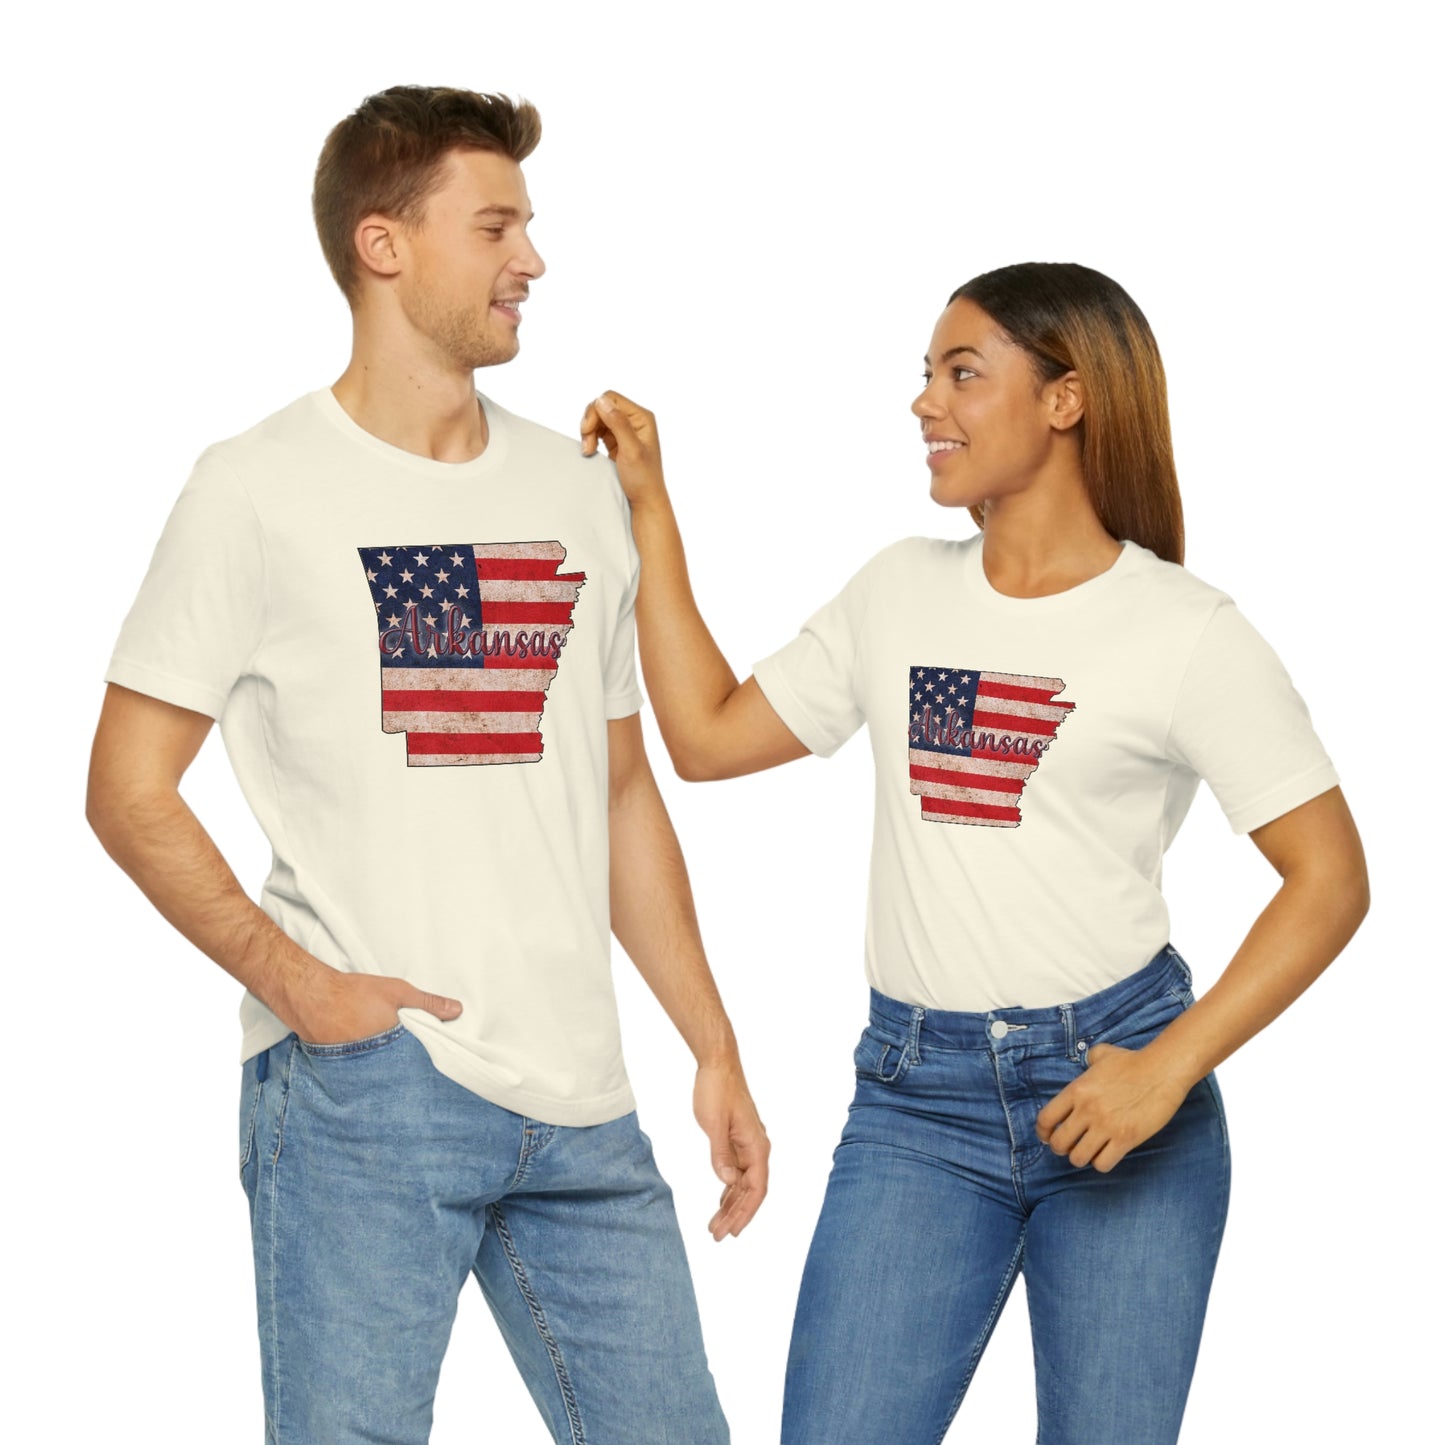 Arkansas US Flag Unisex Jersey Short Sleeve Tee Tshirt T-shirt